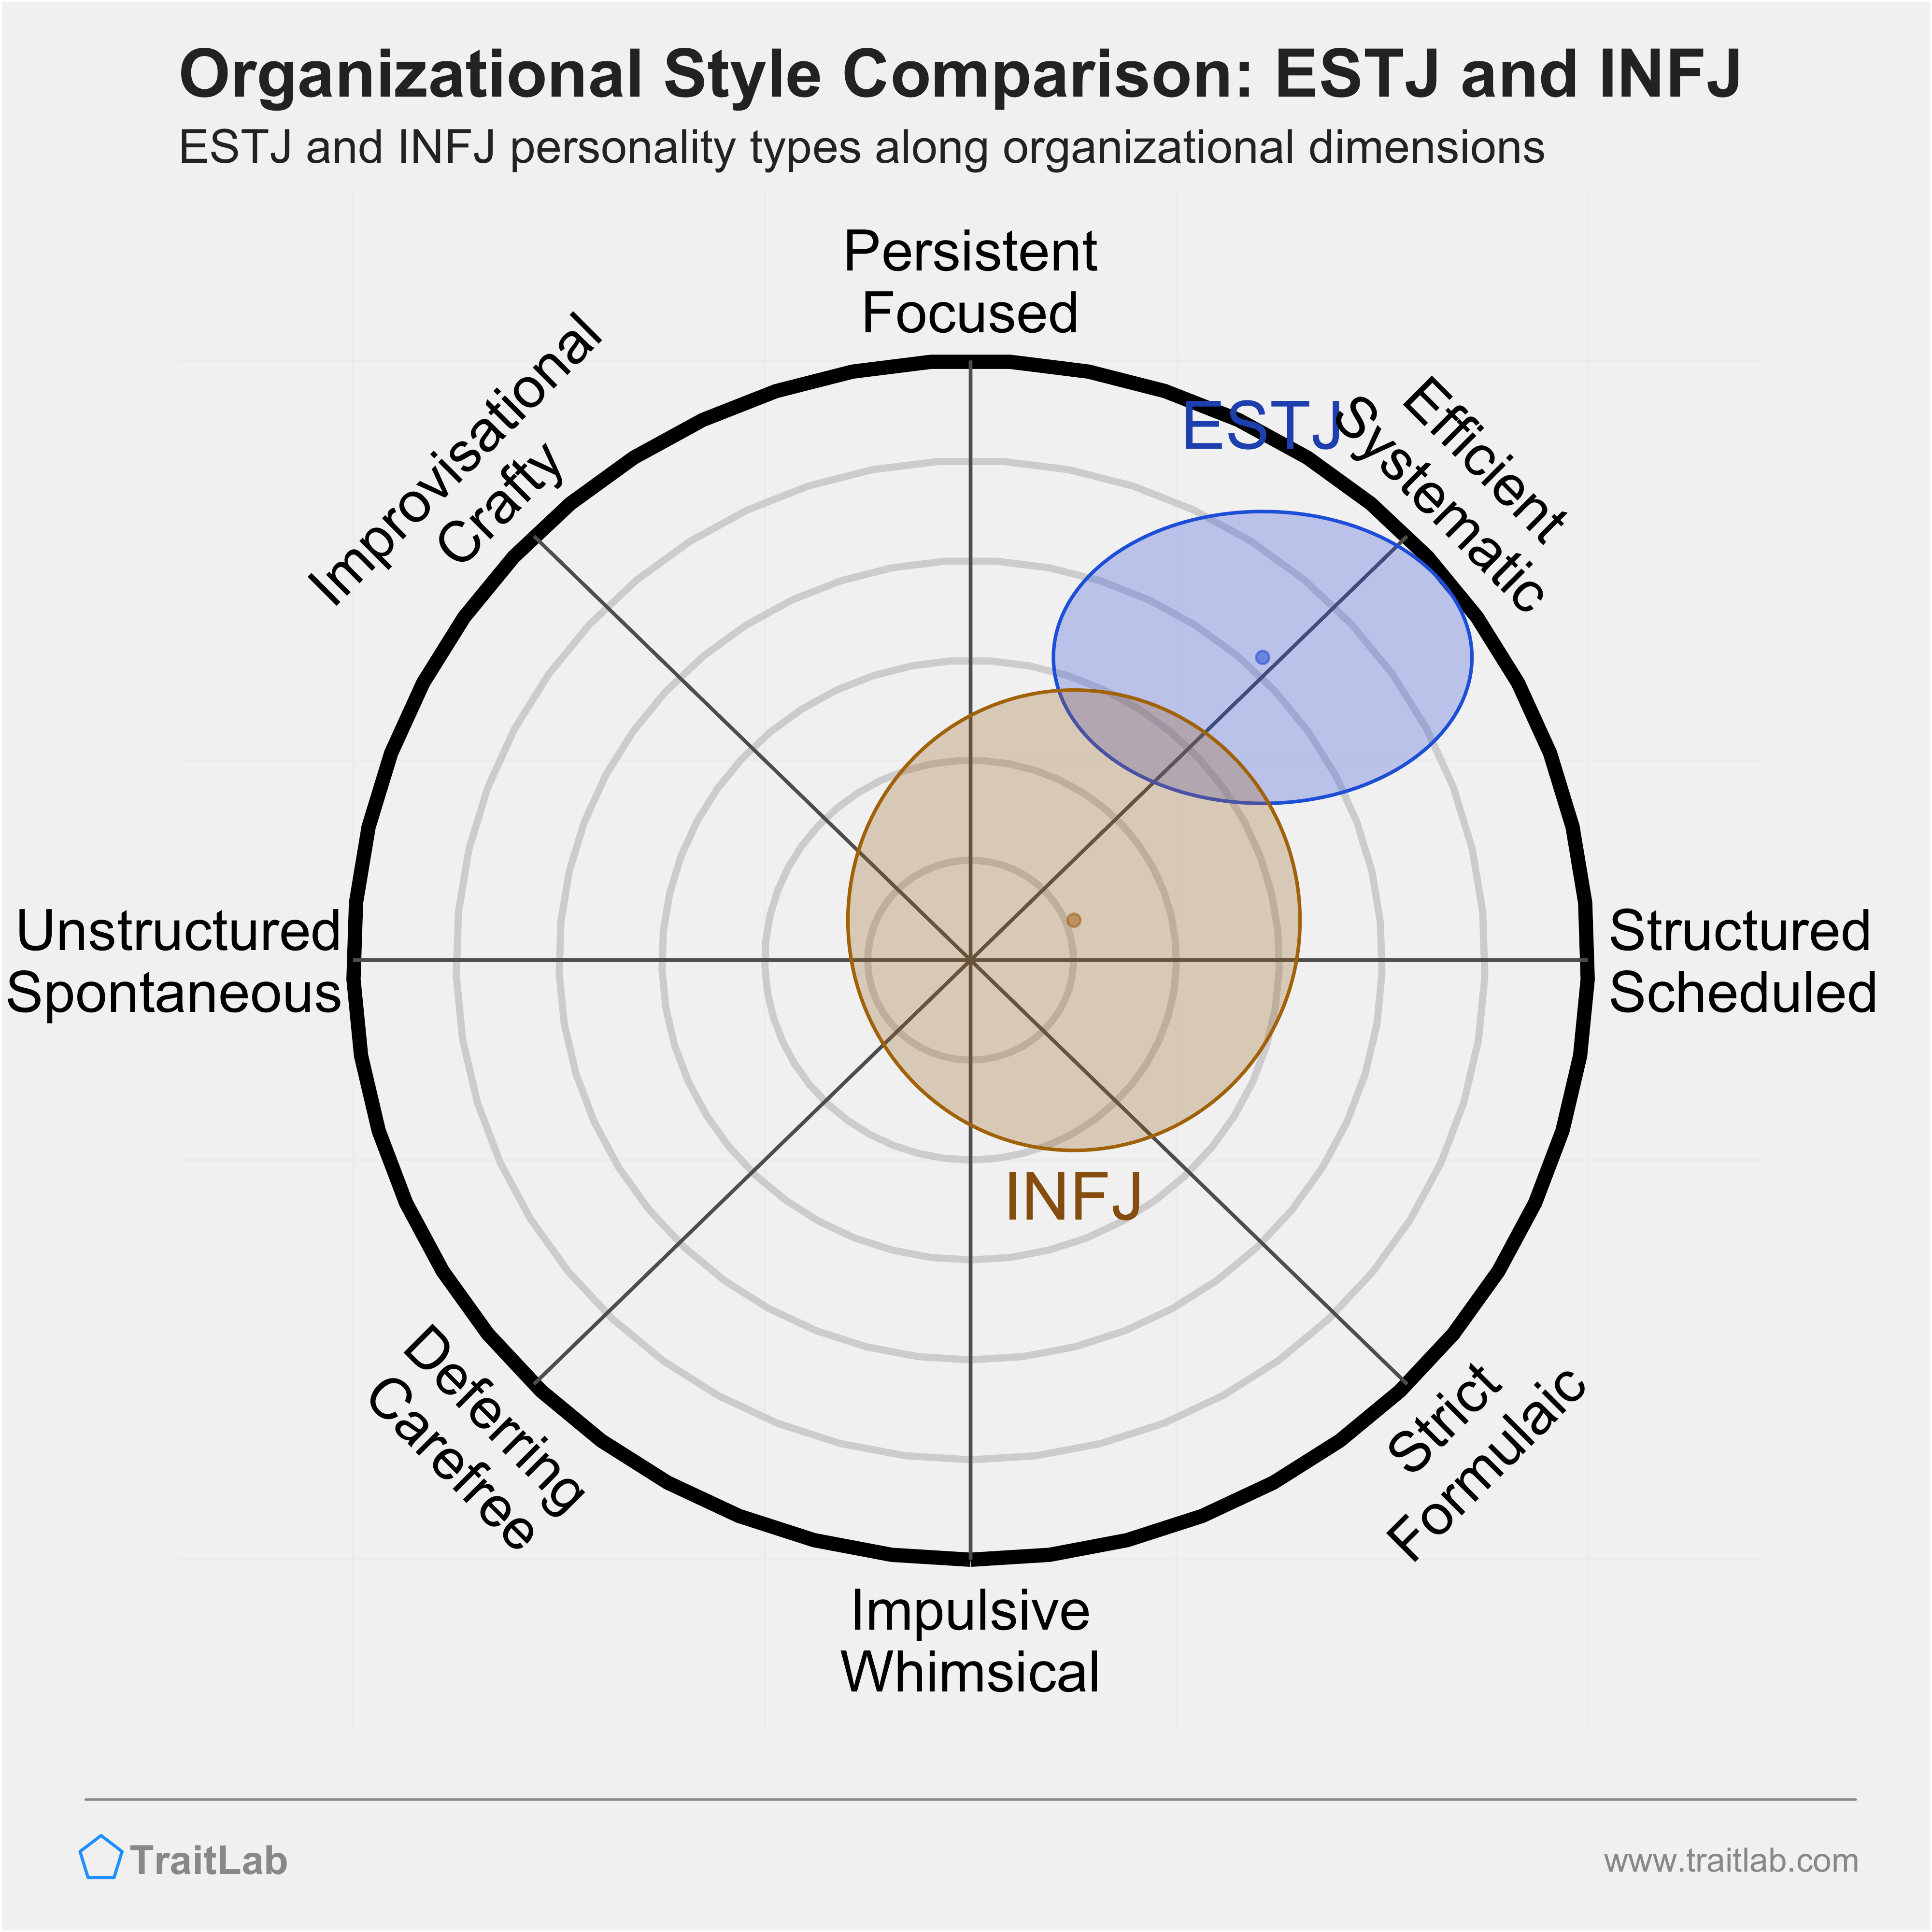 ESTJ and INFJ comparison across organizational dimensions